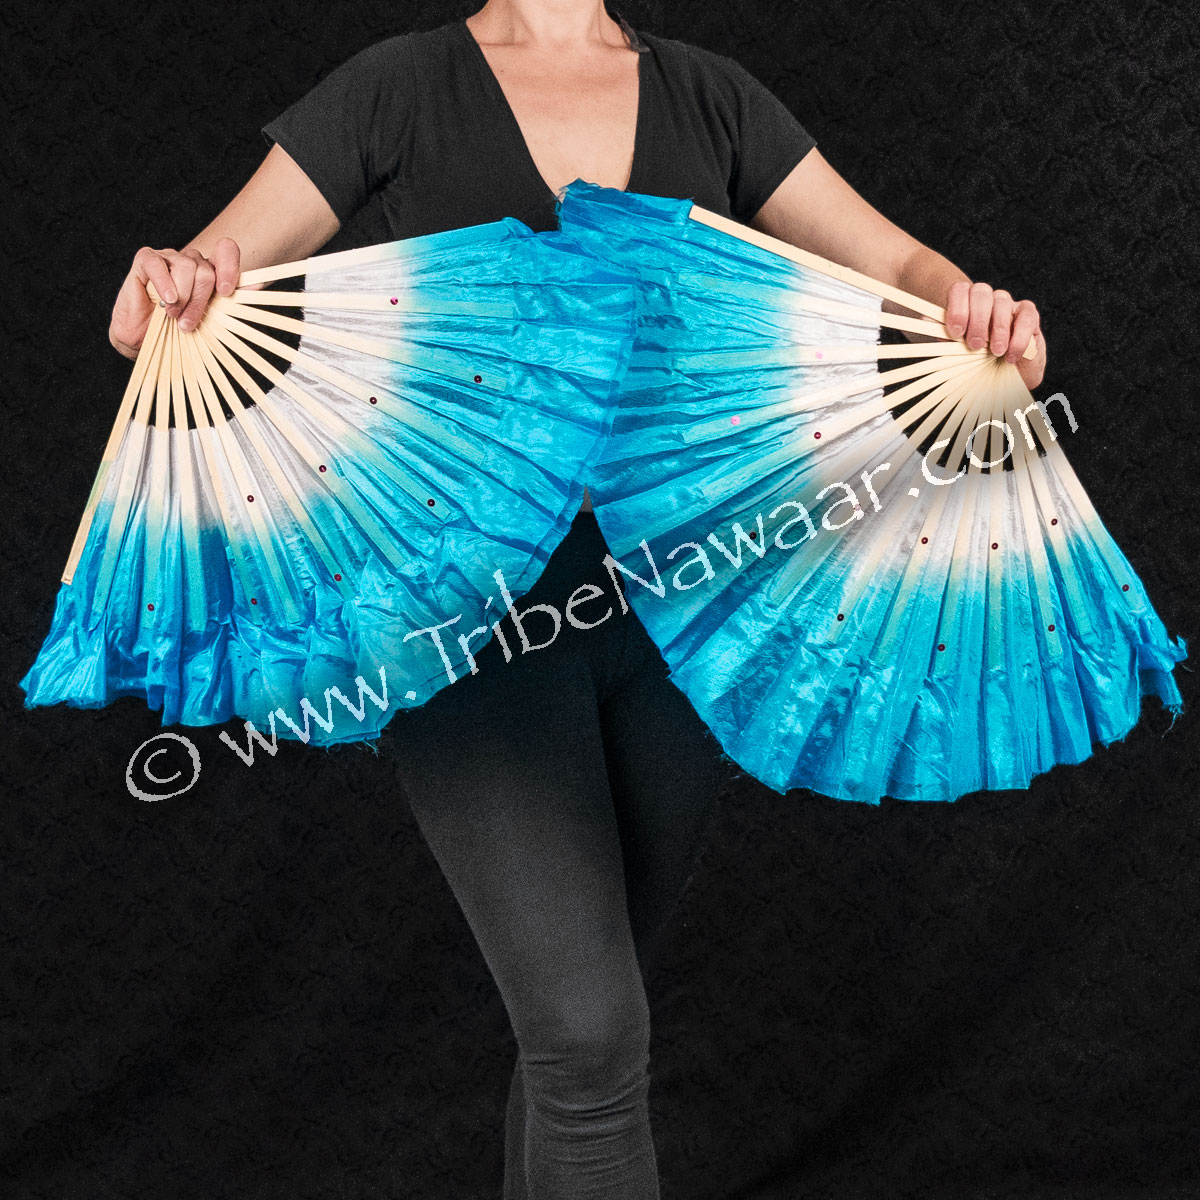 belly dance Fan Veils colorful 100% silk fan Veil 3 colors  White/Turquoise/Blue